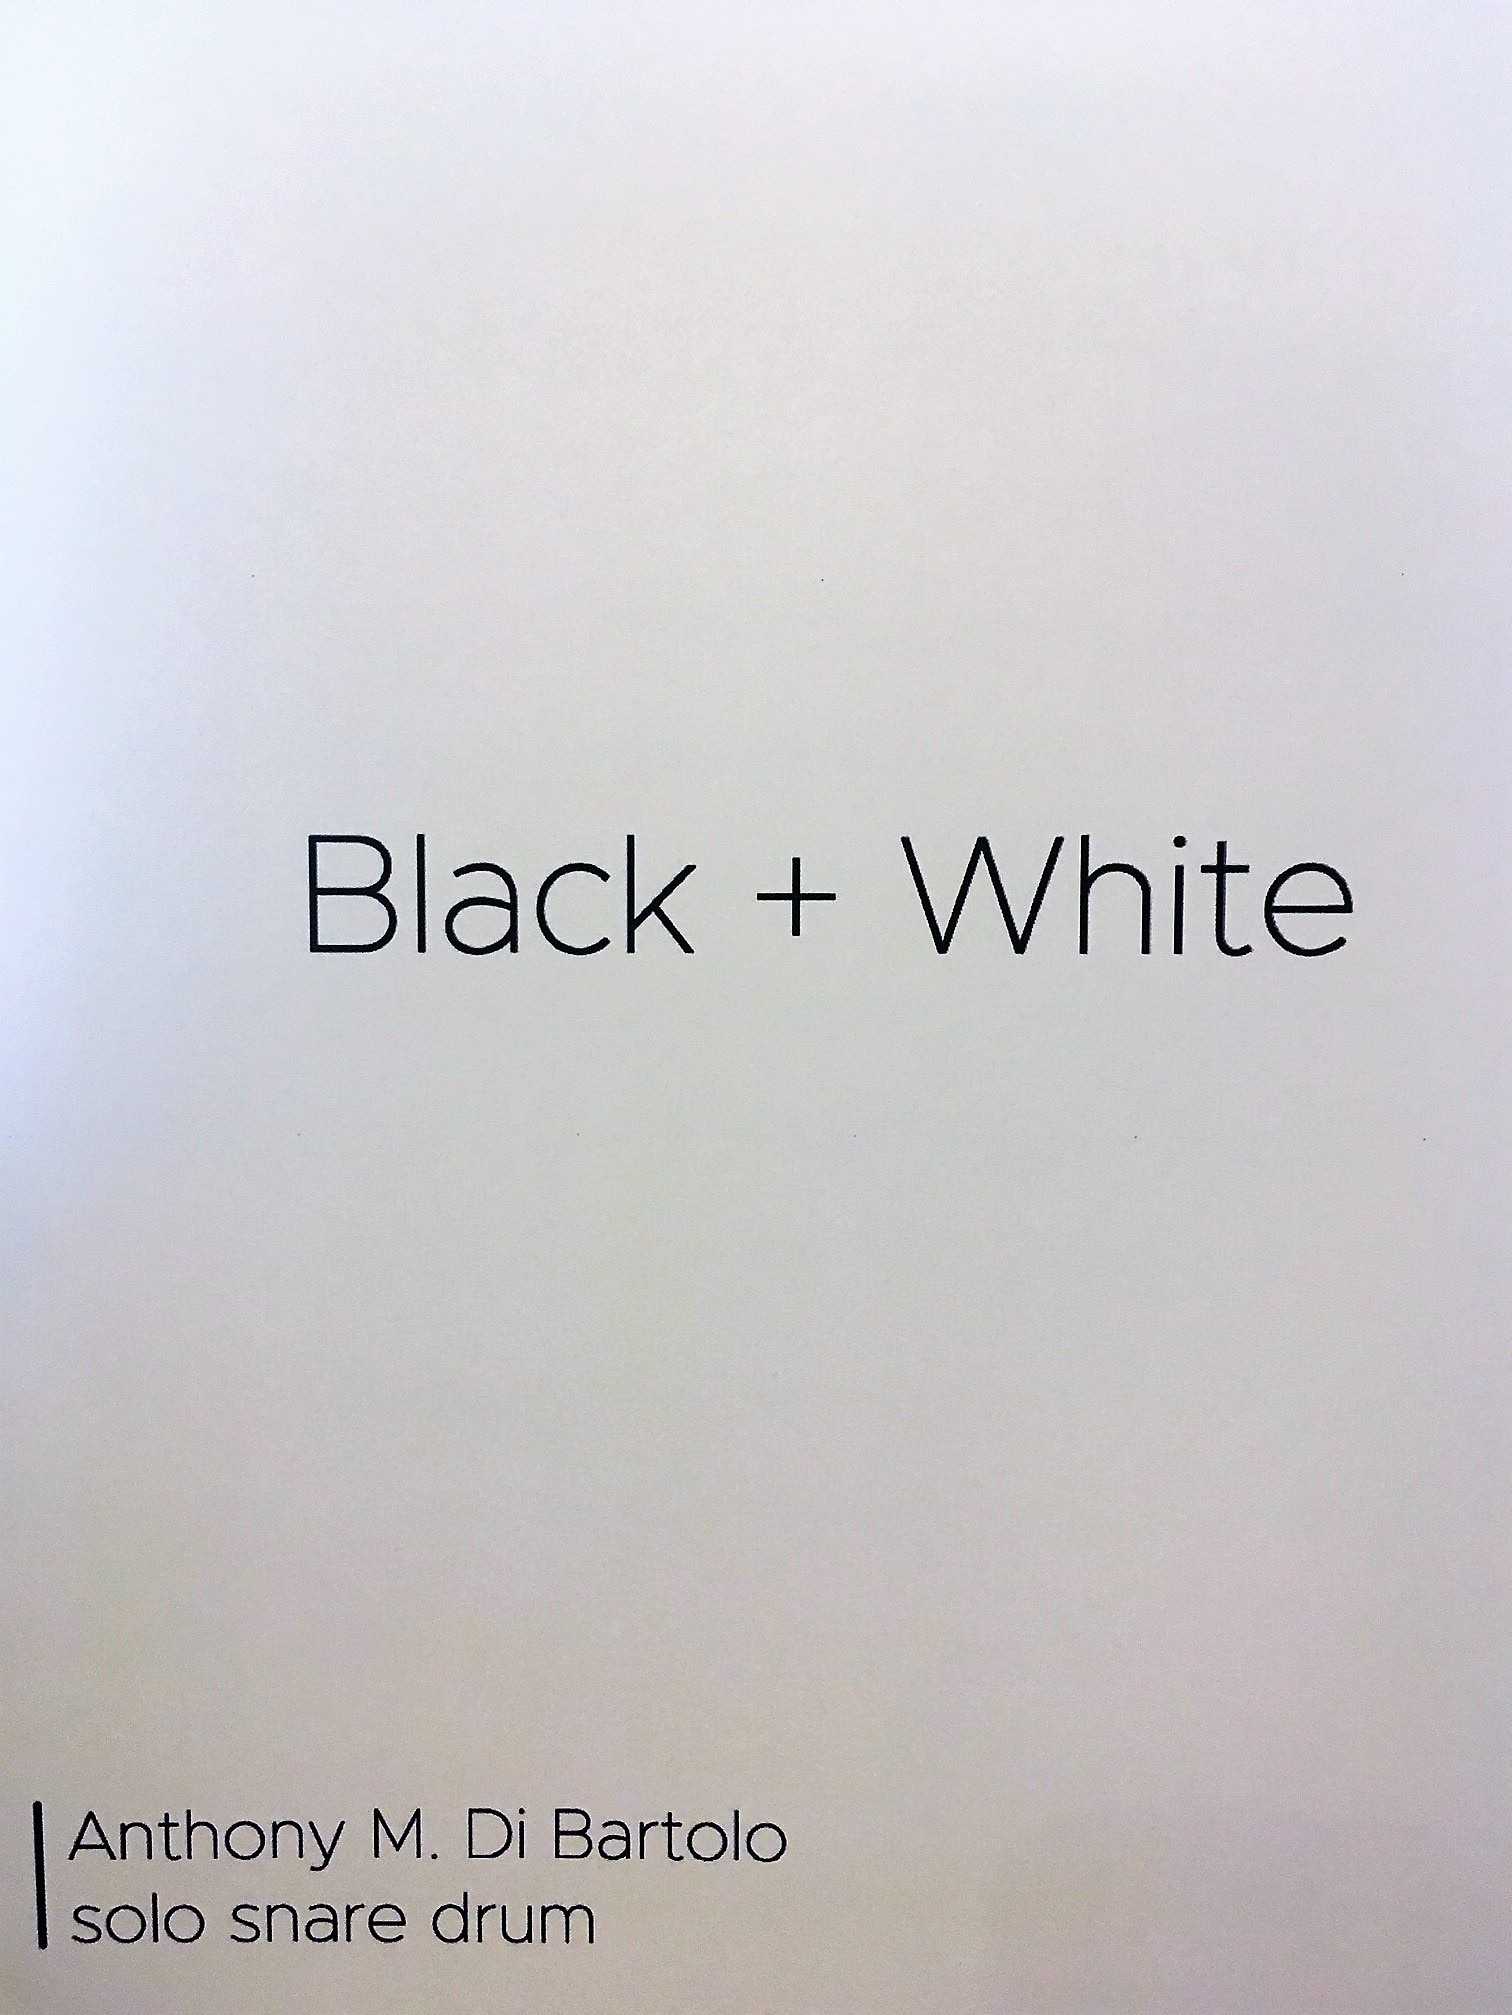 Black + White by Anthony Bartolo